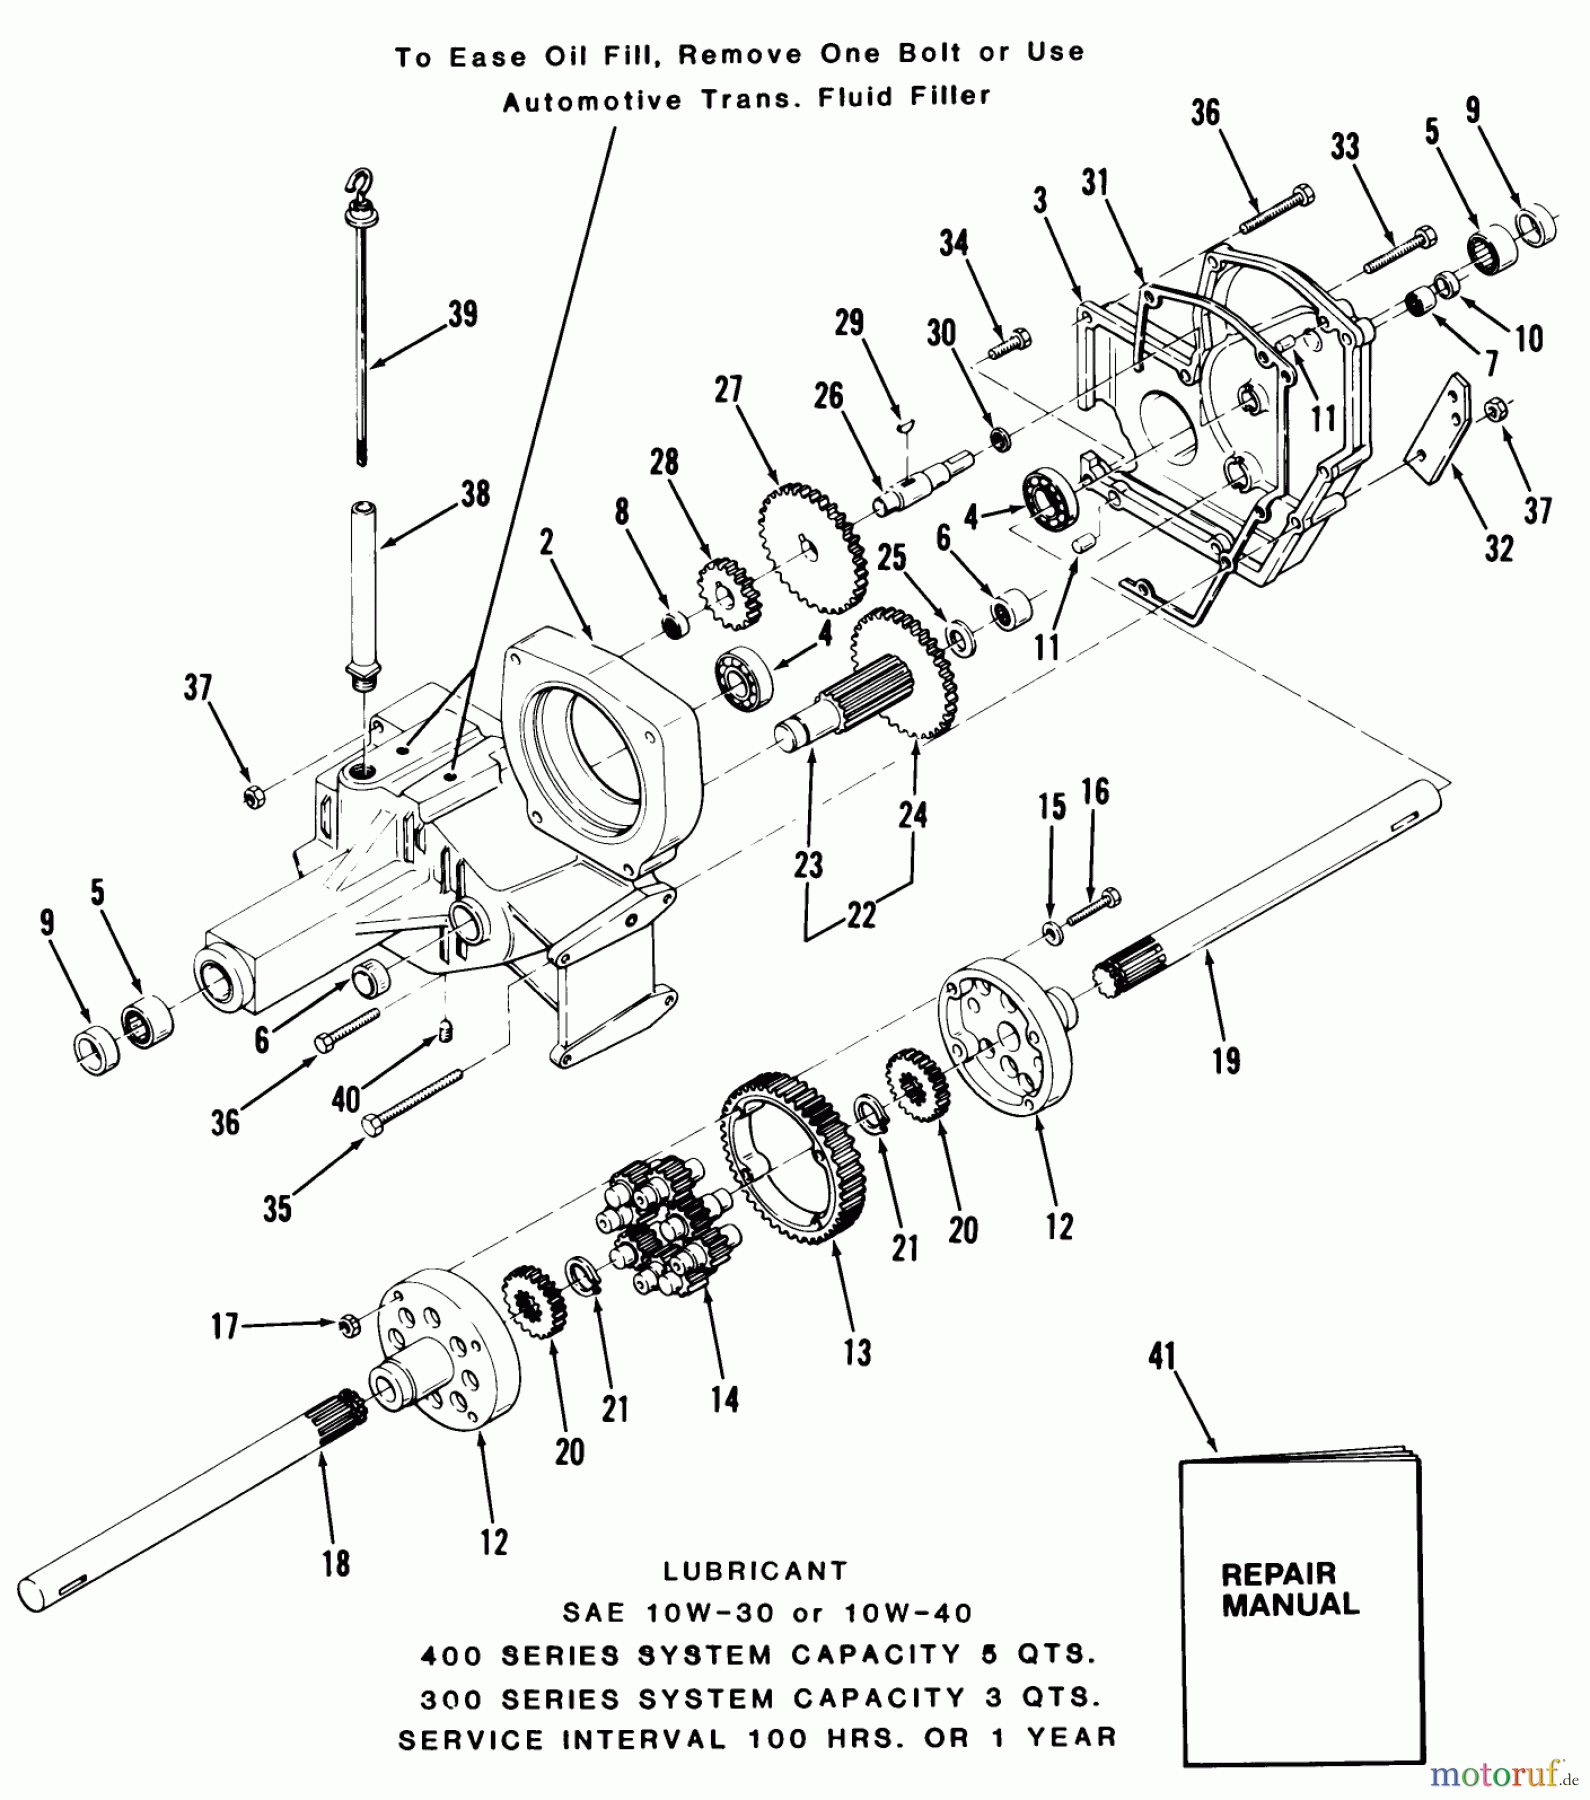  Toro Neu Mowers, Lawn & Garden Tractor Seite 1 31-16K801 (416-8) - Toro 416-8 Garden Tractor, 1985 TRANSAXLE-300/400 SERIES